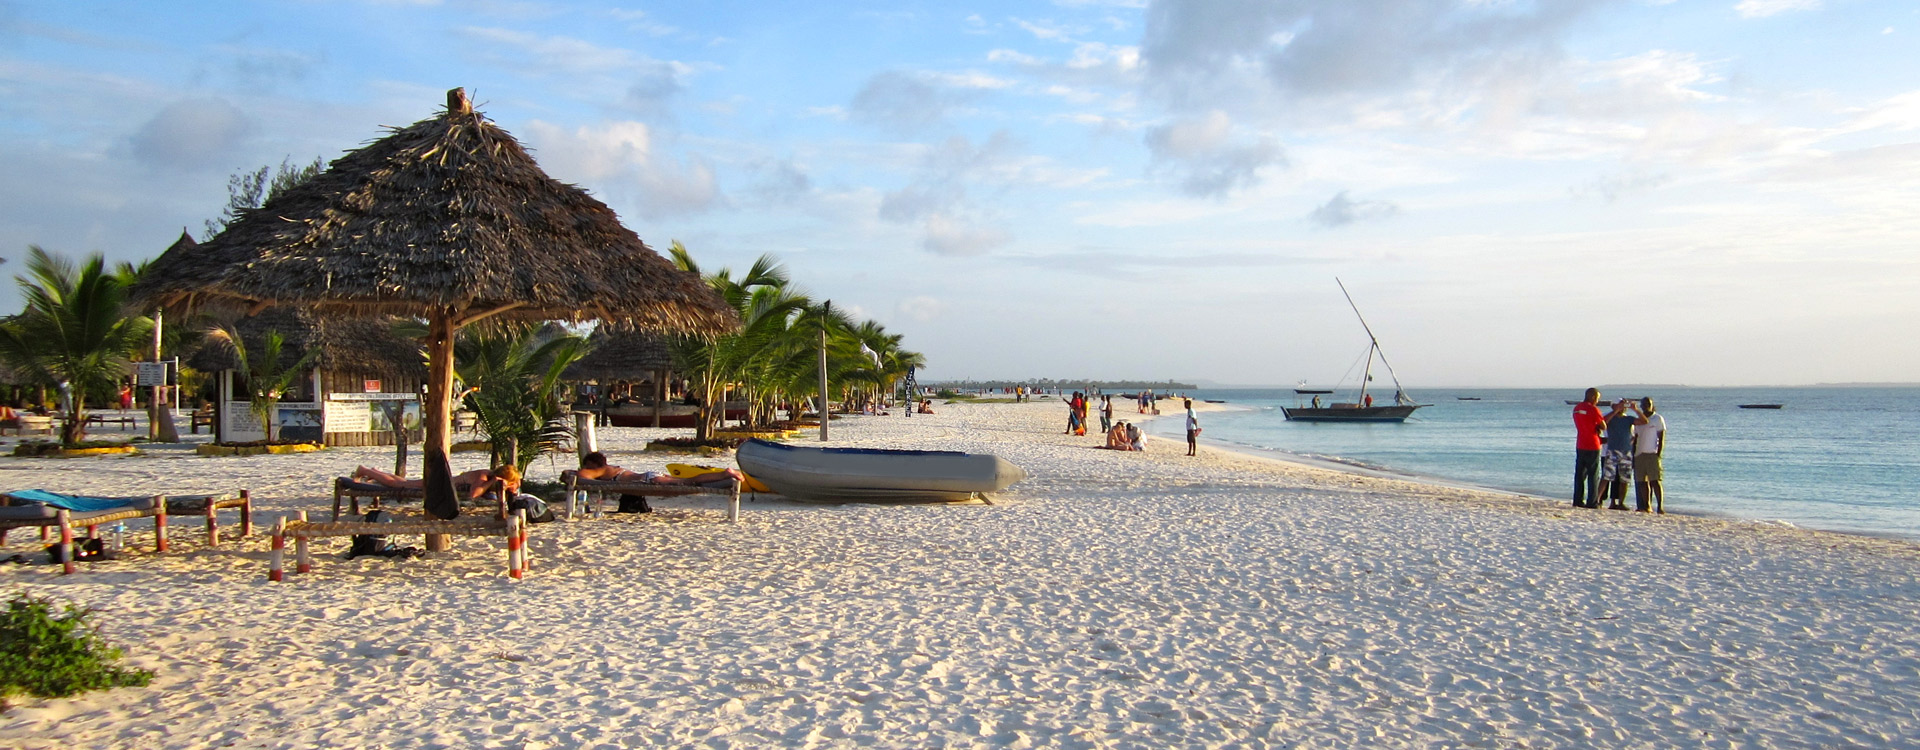 8 Days Papya Beach Holidays to Zanzibar